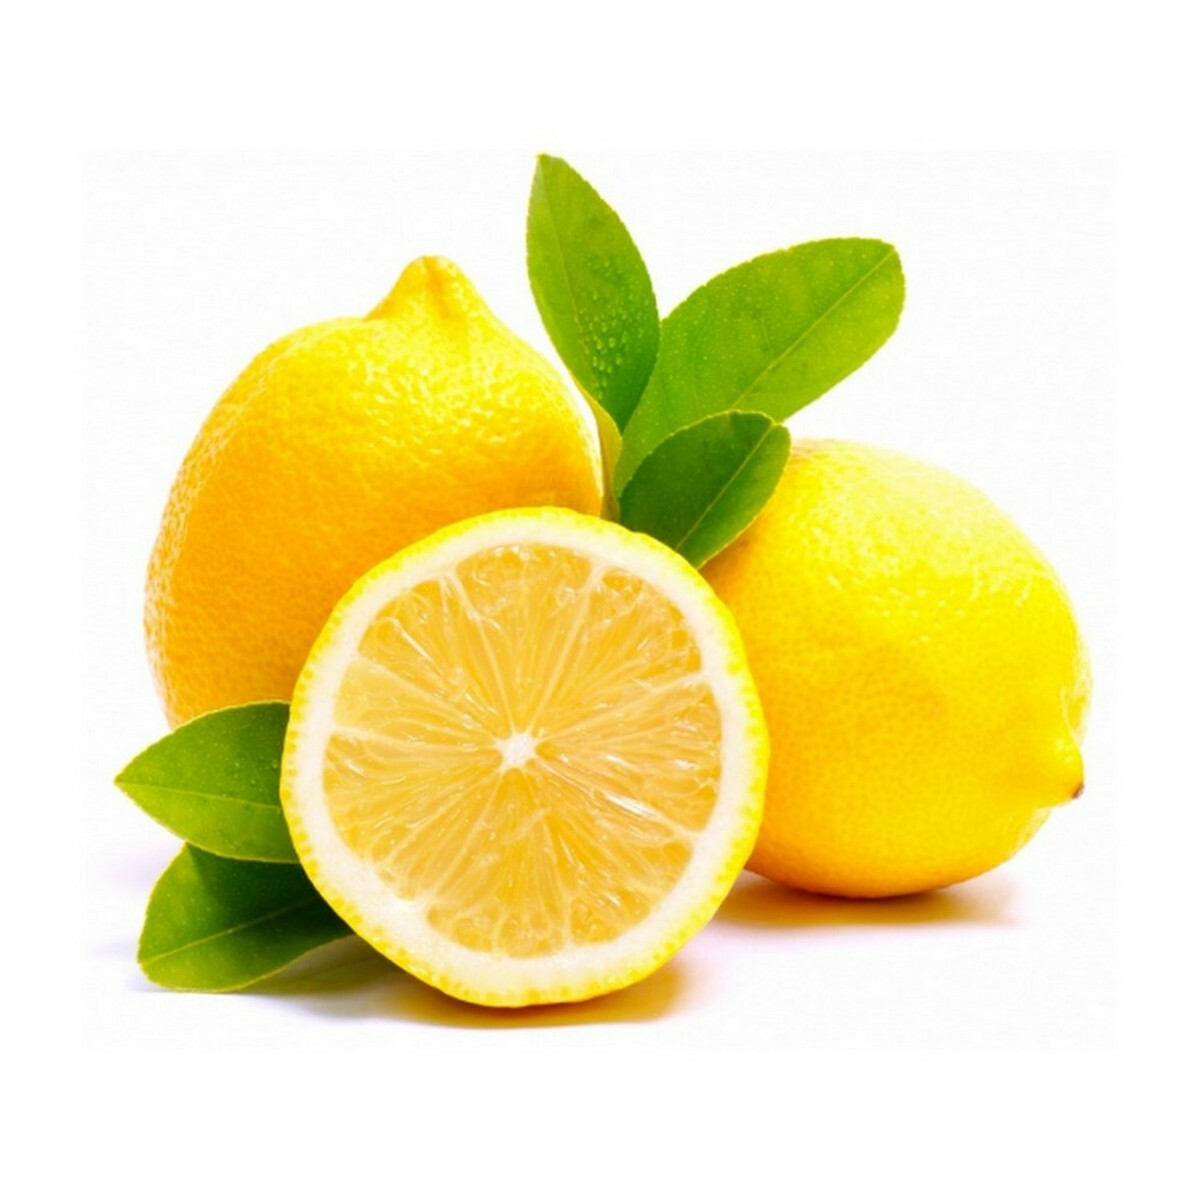 Lemon South Africa 3 kg